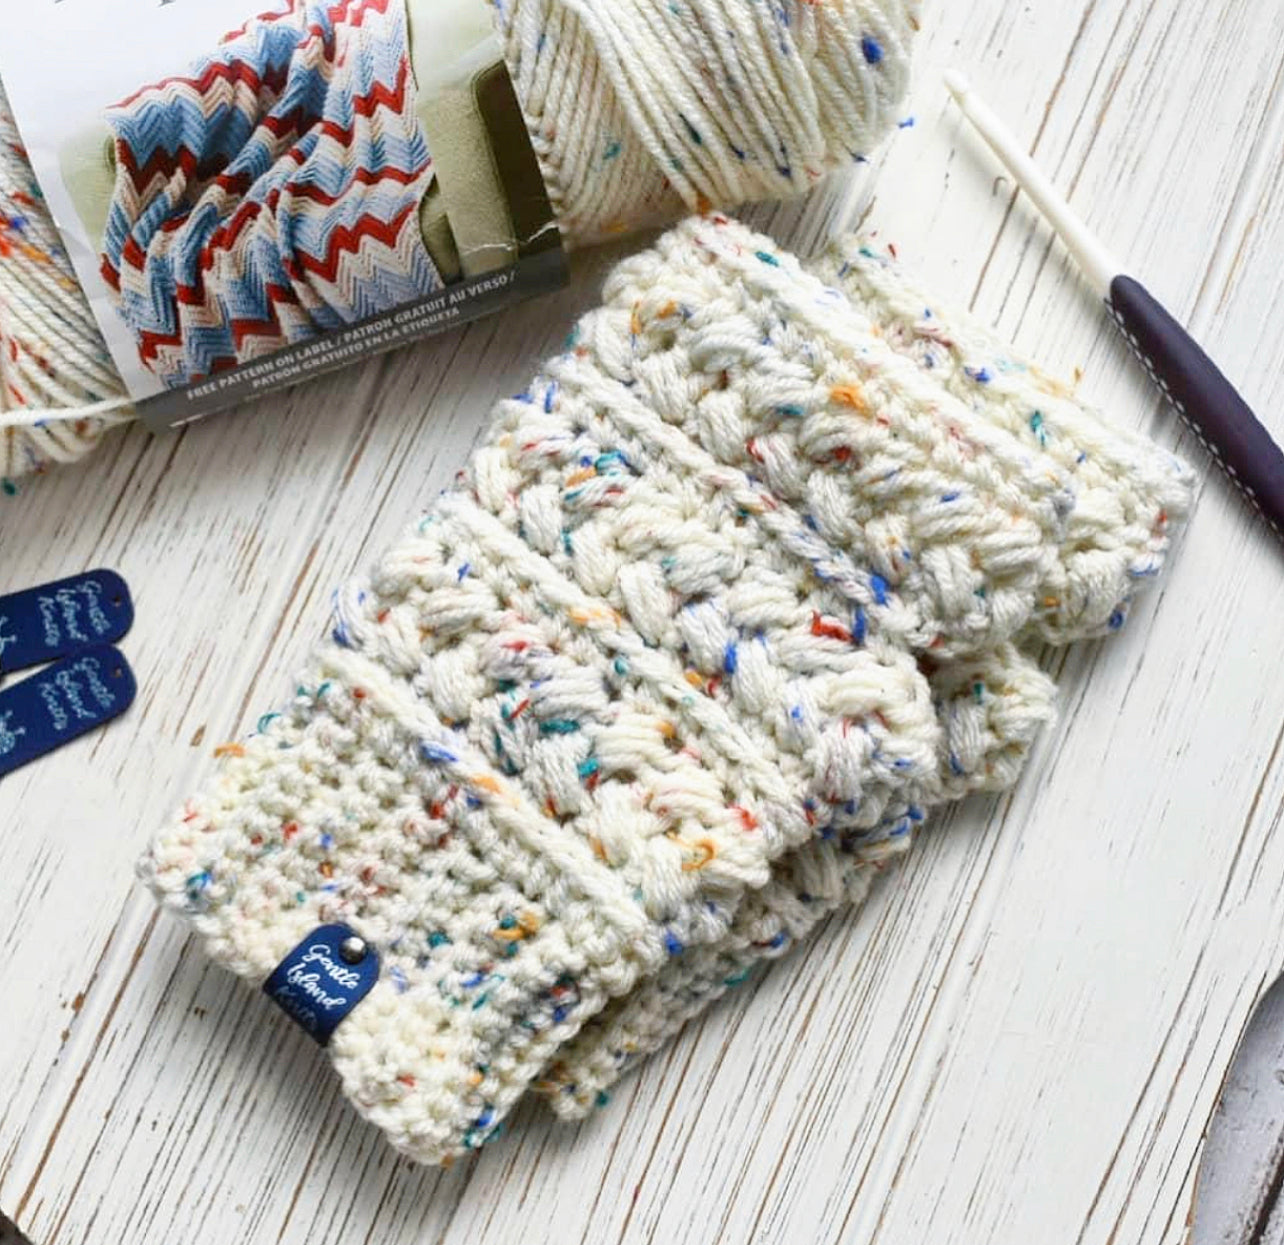 Winter Braid Gloves Crochet Pattern by Sheepish Stitches